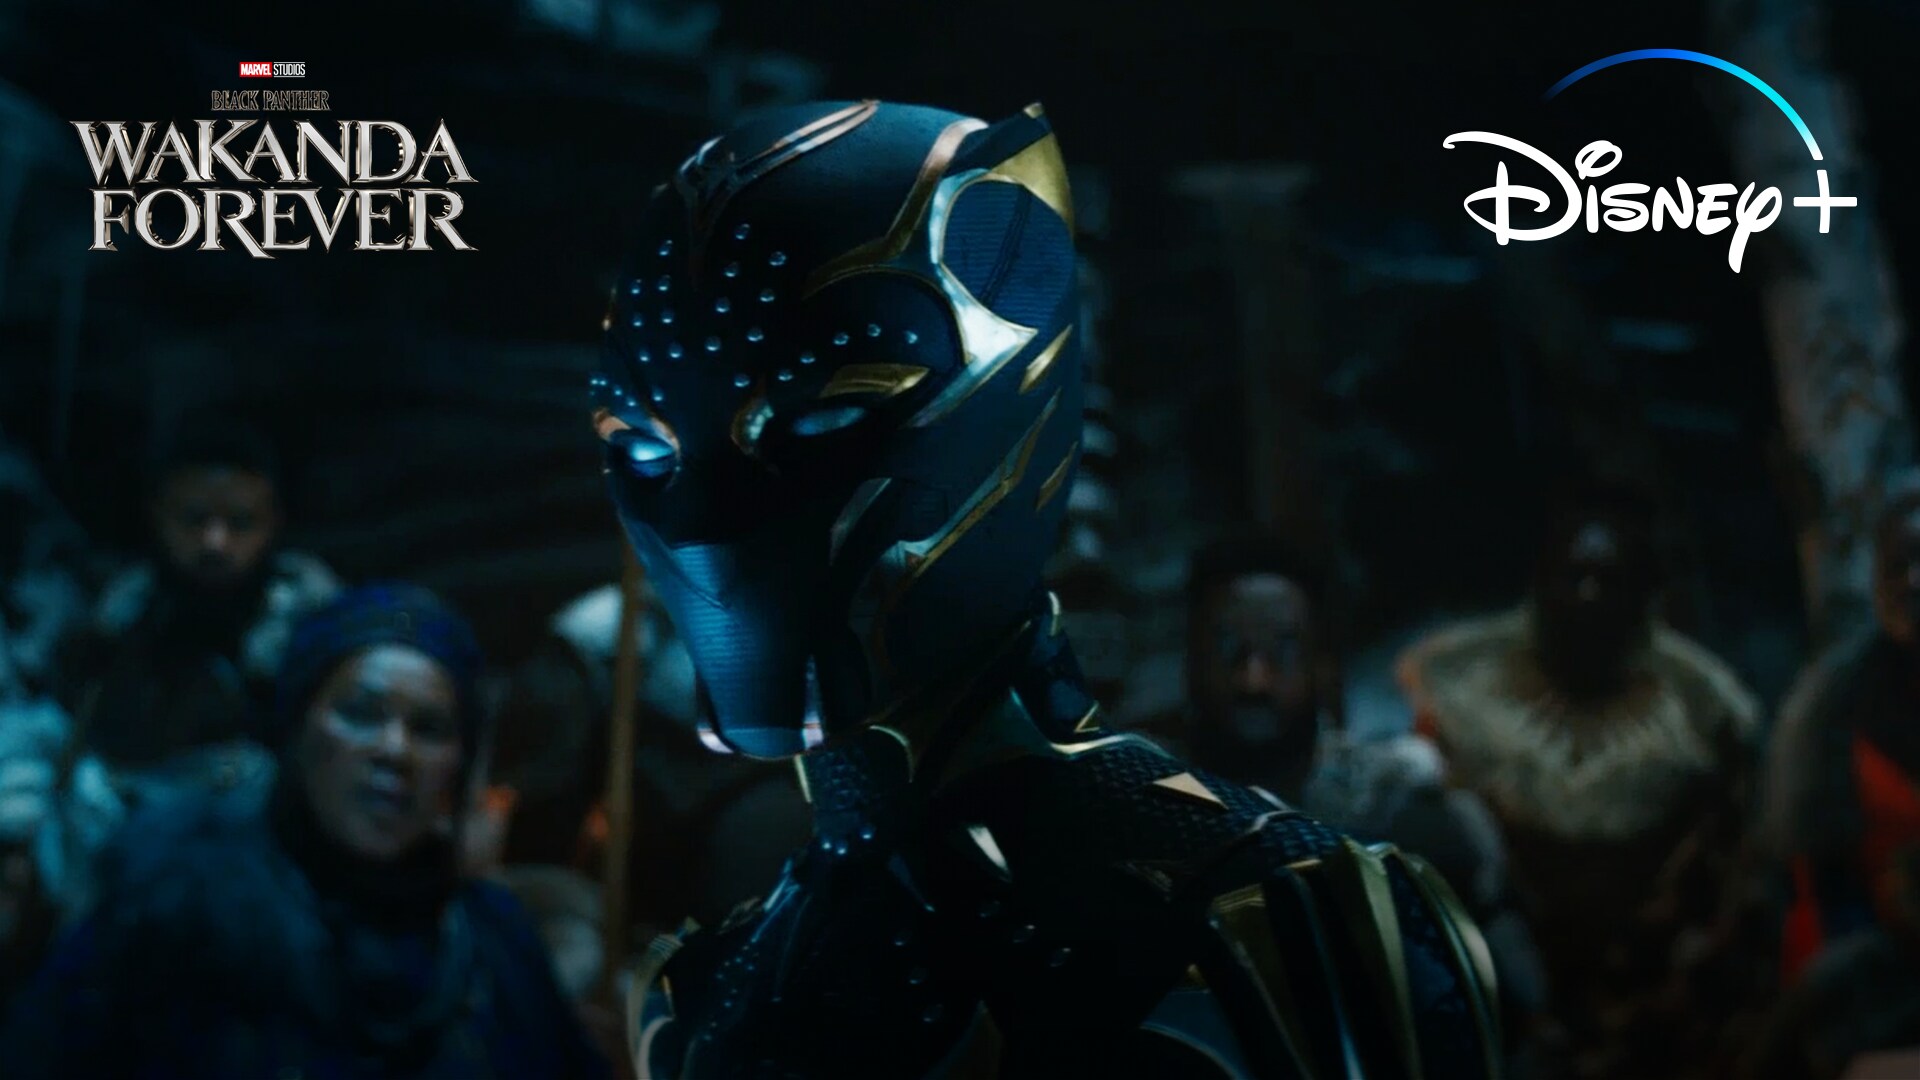 Marvel Studios’ Black Panther: Wakanda Forever | Streaming February 1